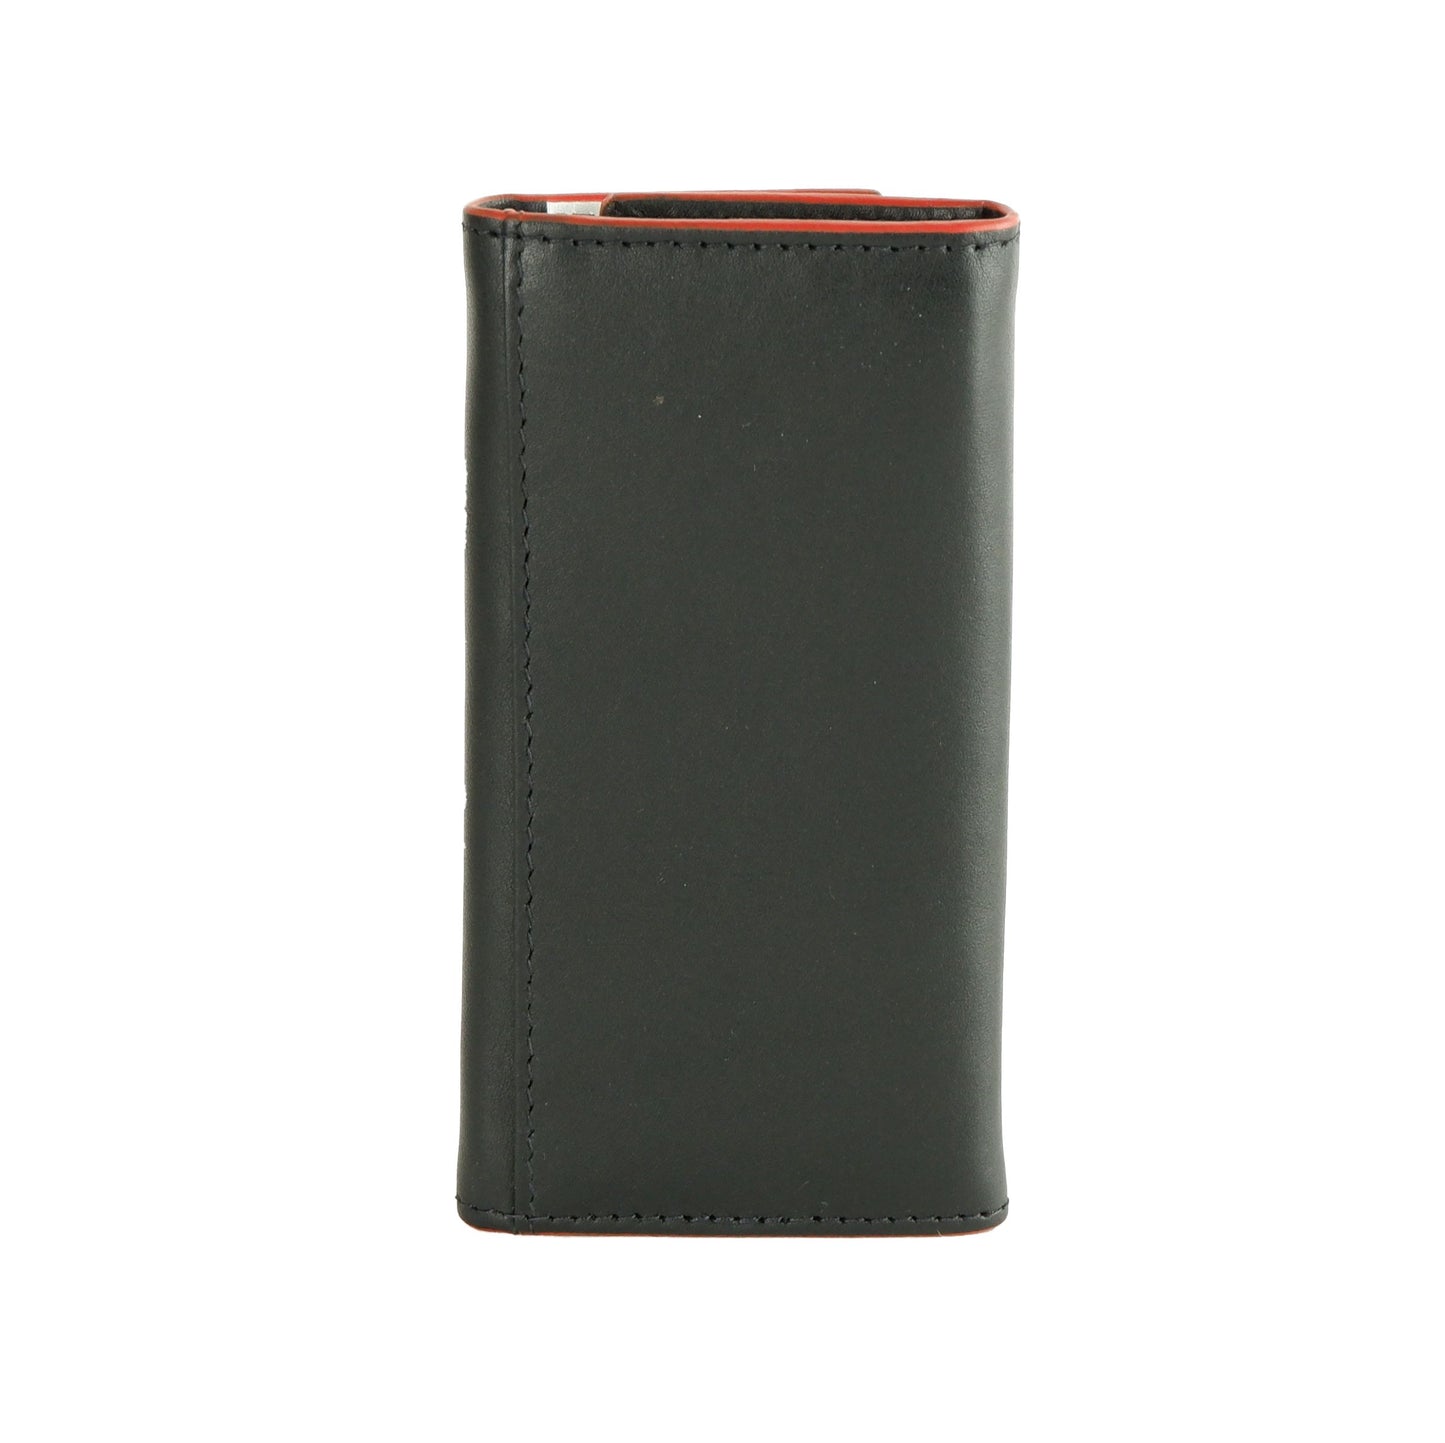 Sleek Black Leather Card Holder with Zip Pocket